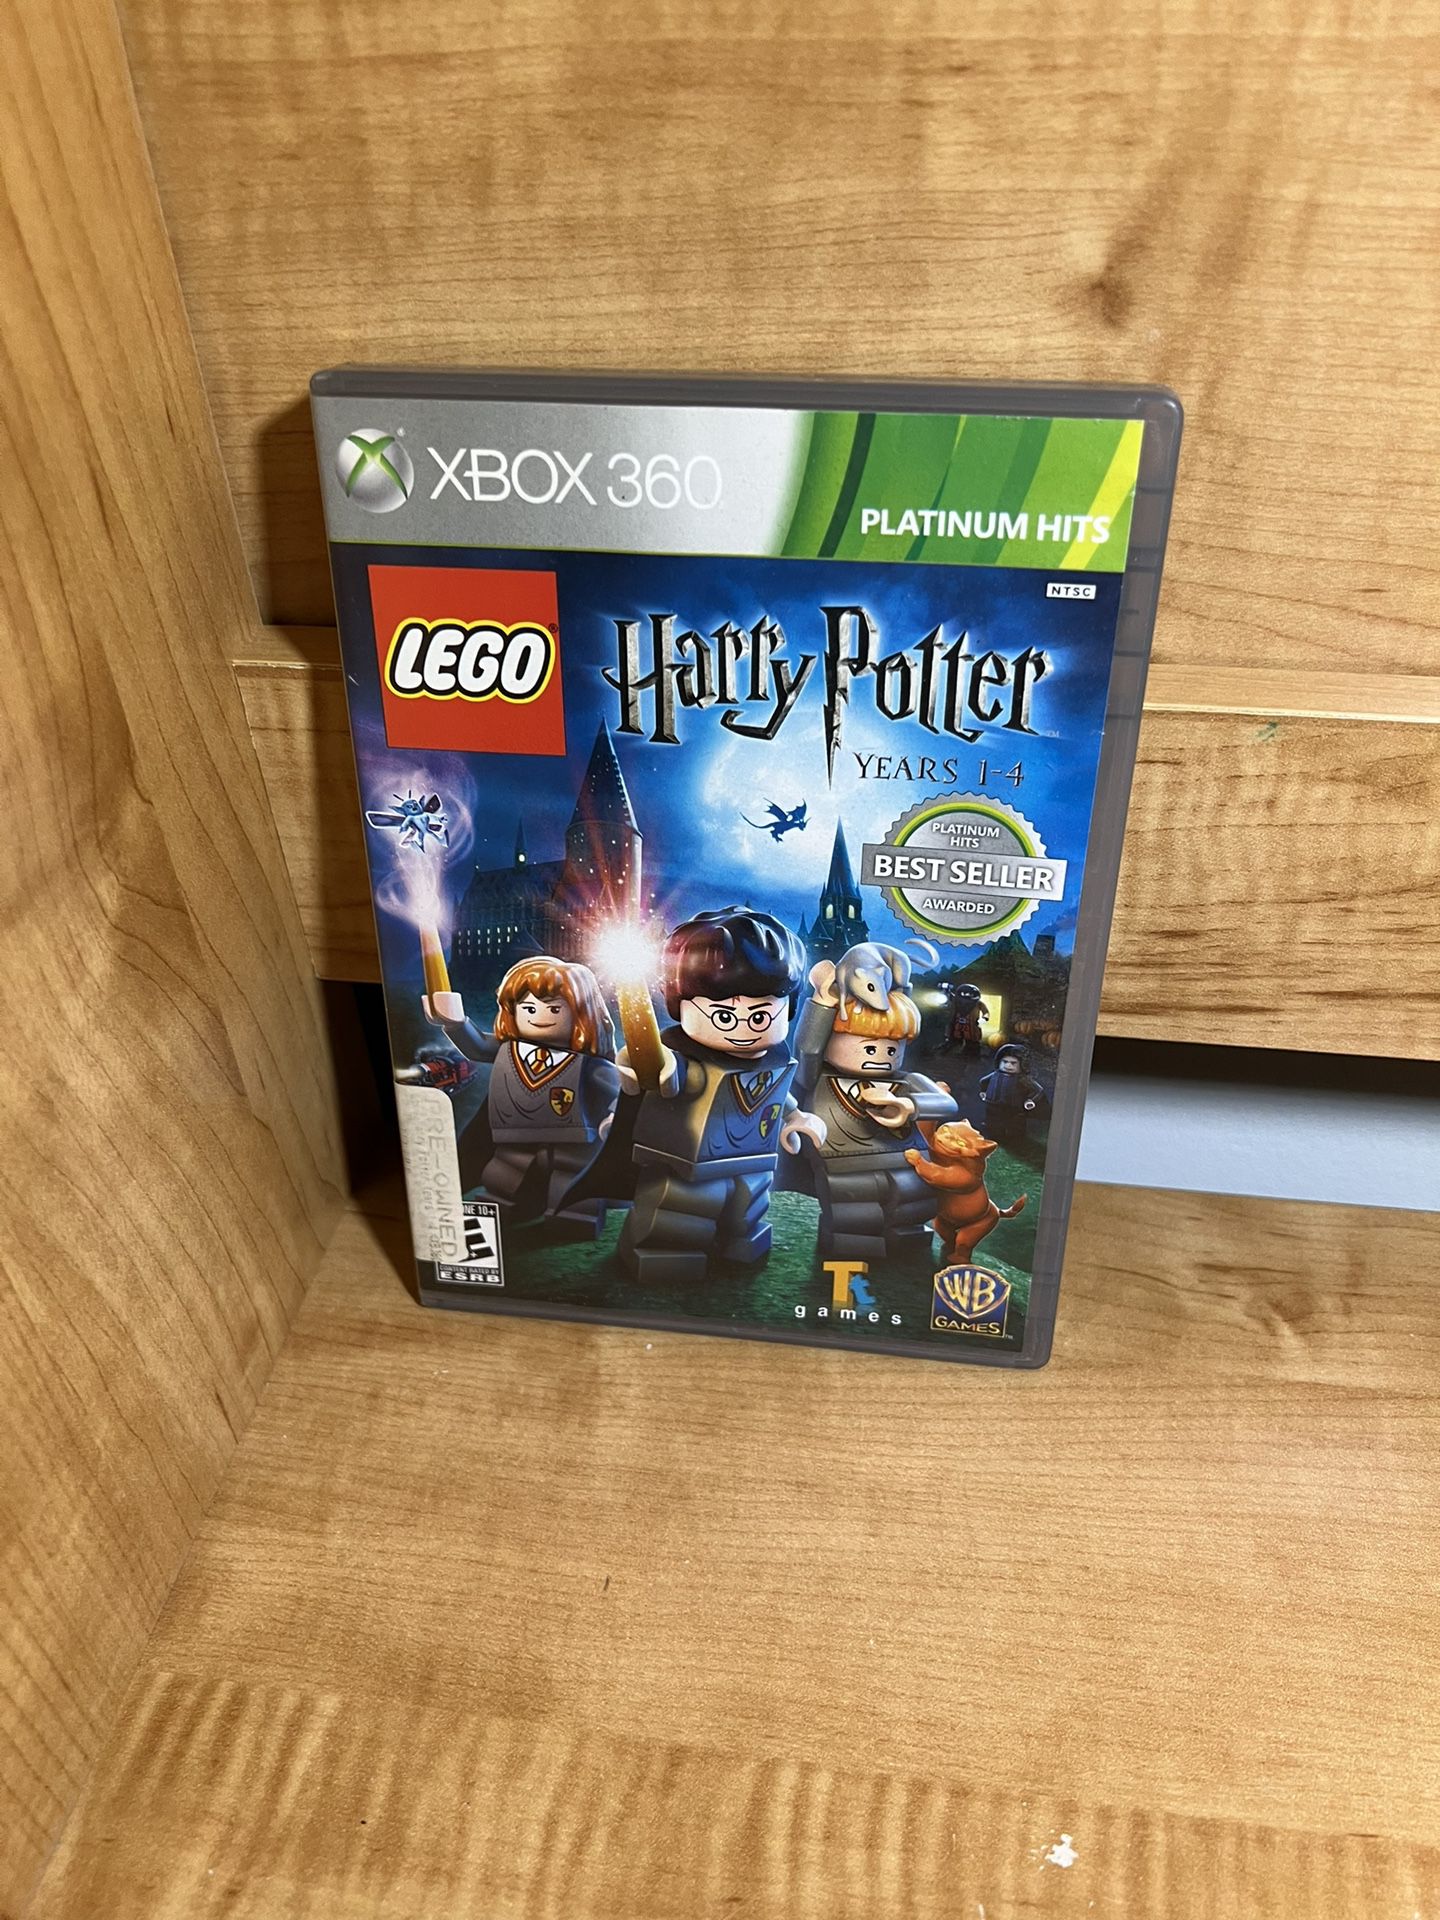 Lego Harry Potter 1-4 - Xbox 360